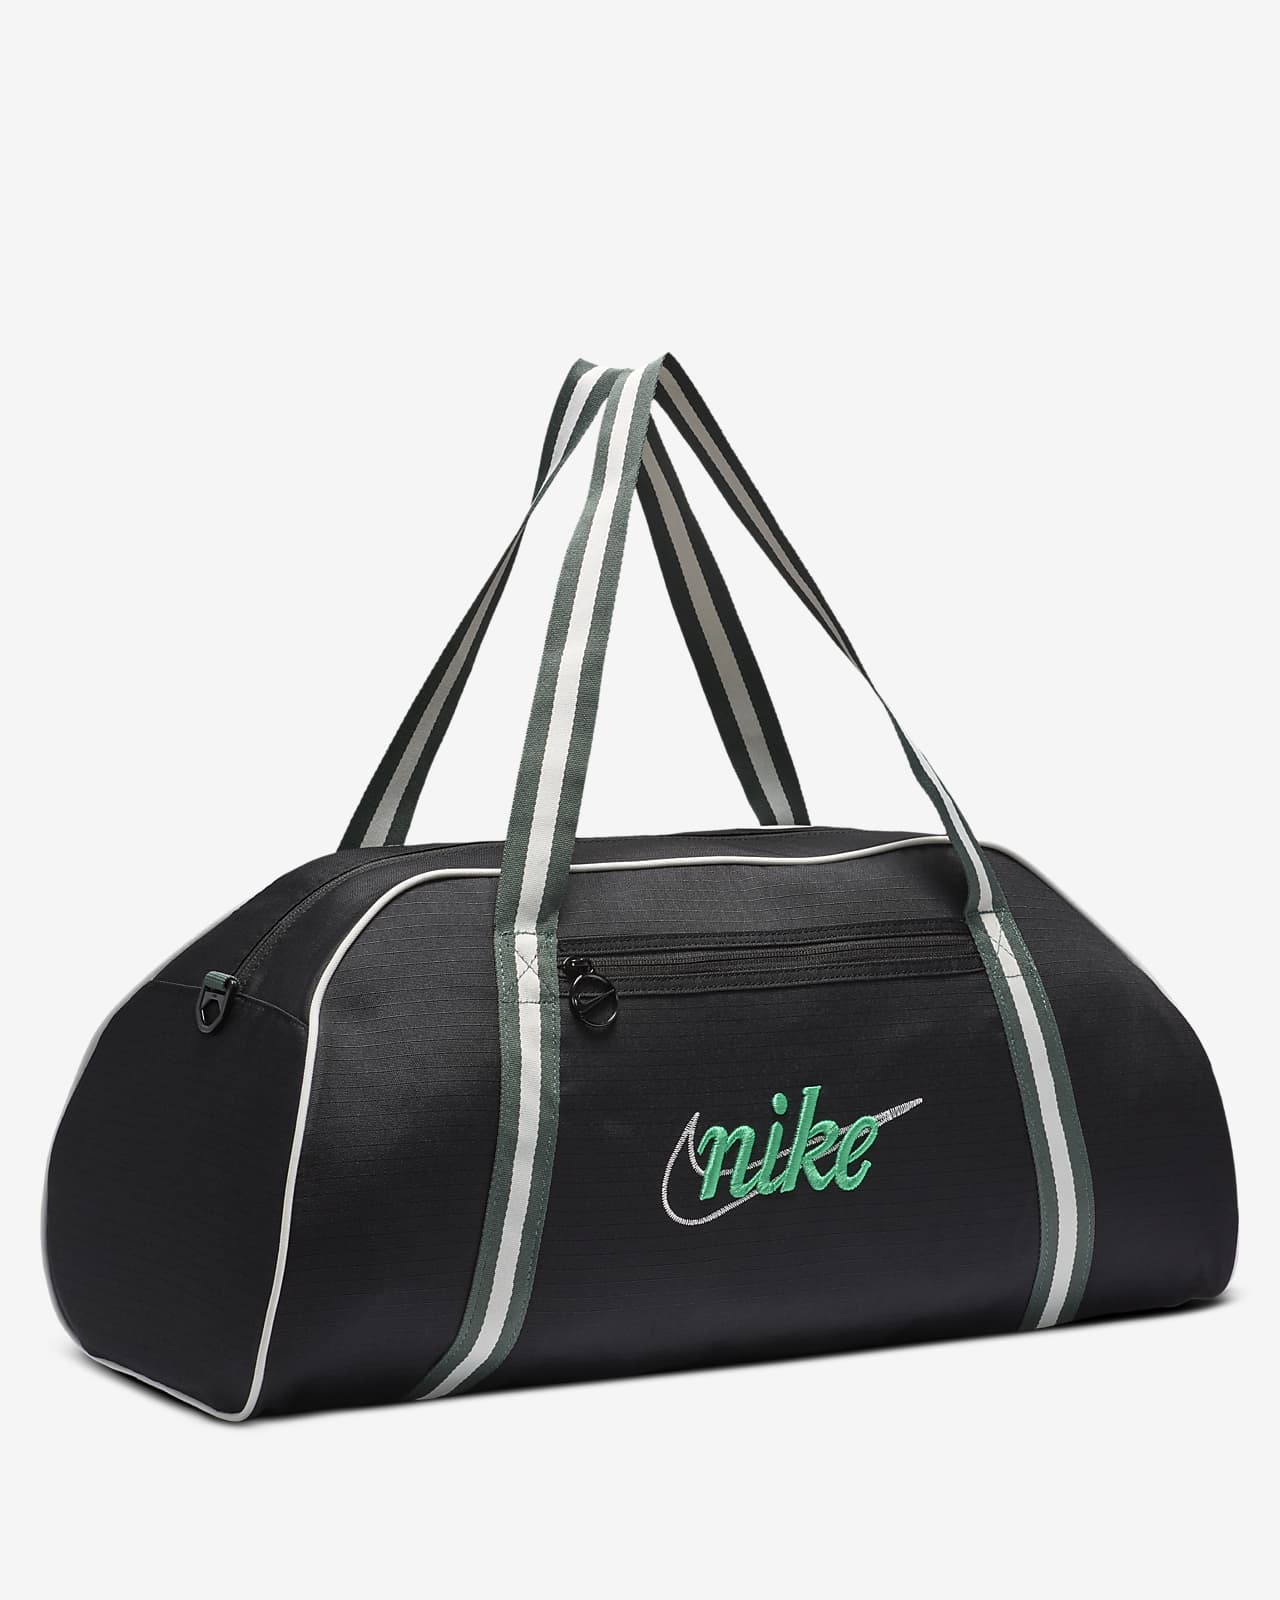 New Nike Victory Yoga Tote Sling OSFM Gym Bag Hobo Shoulder Bag Black